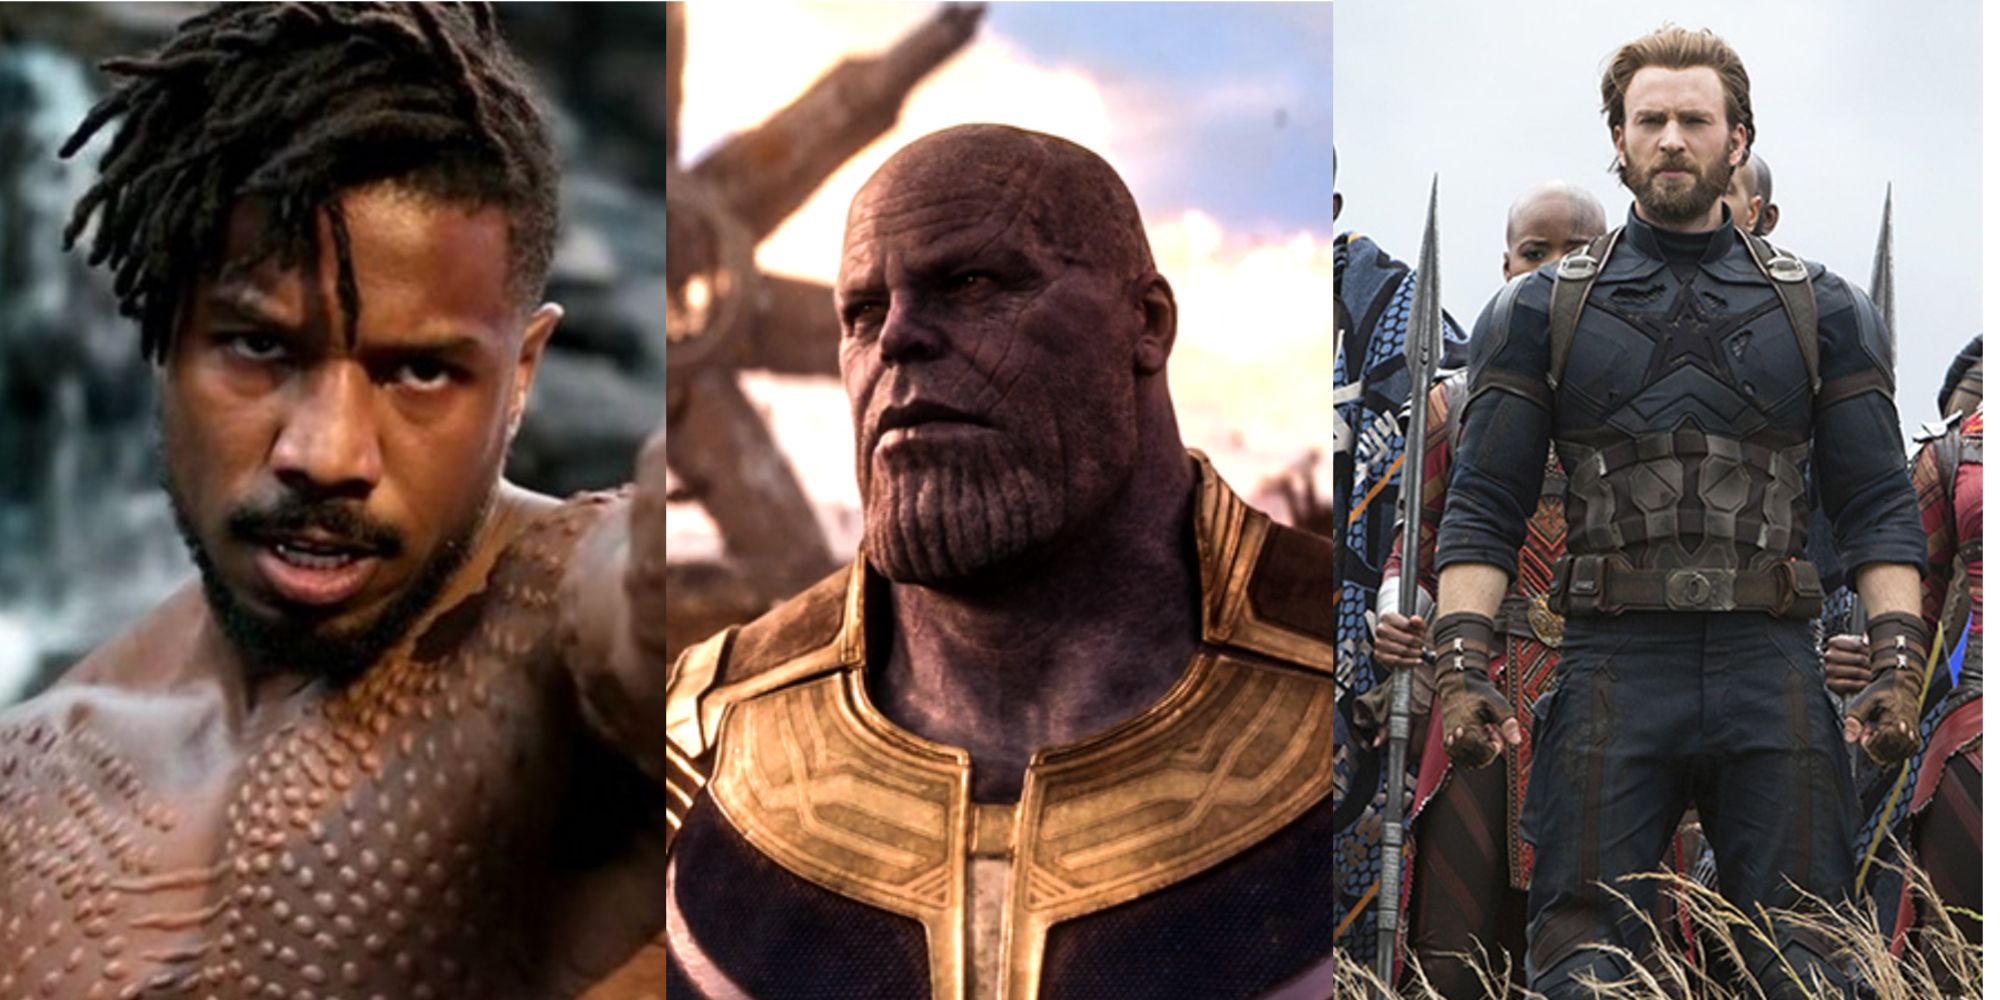 A split image of Killmonger, Thanos, and Steve Rogers is shown.